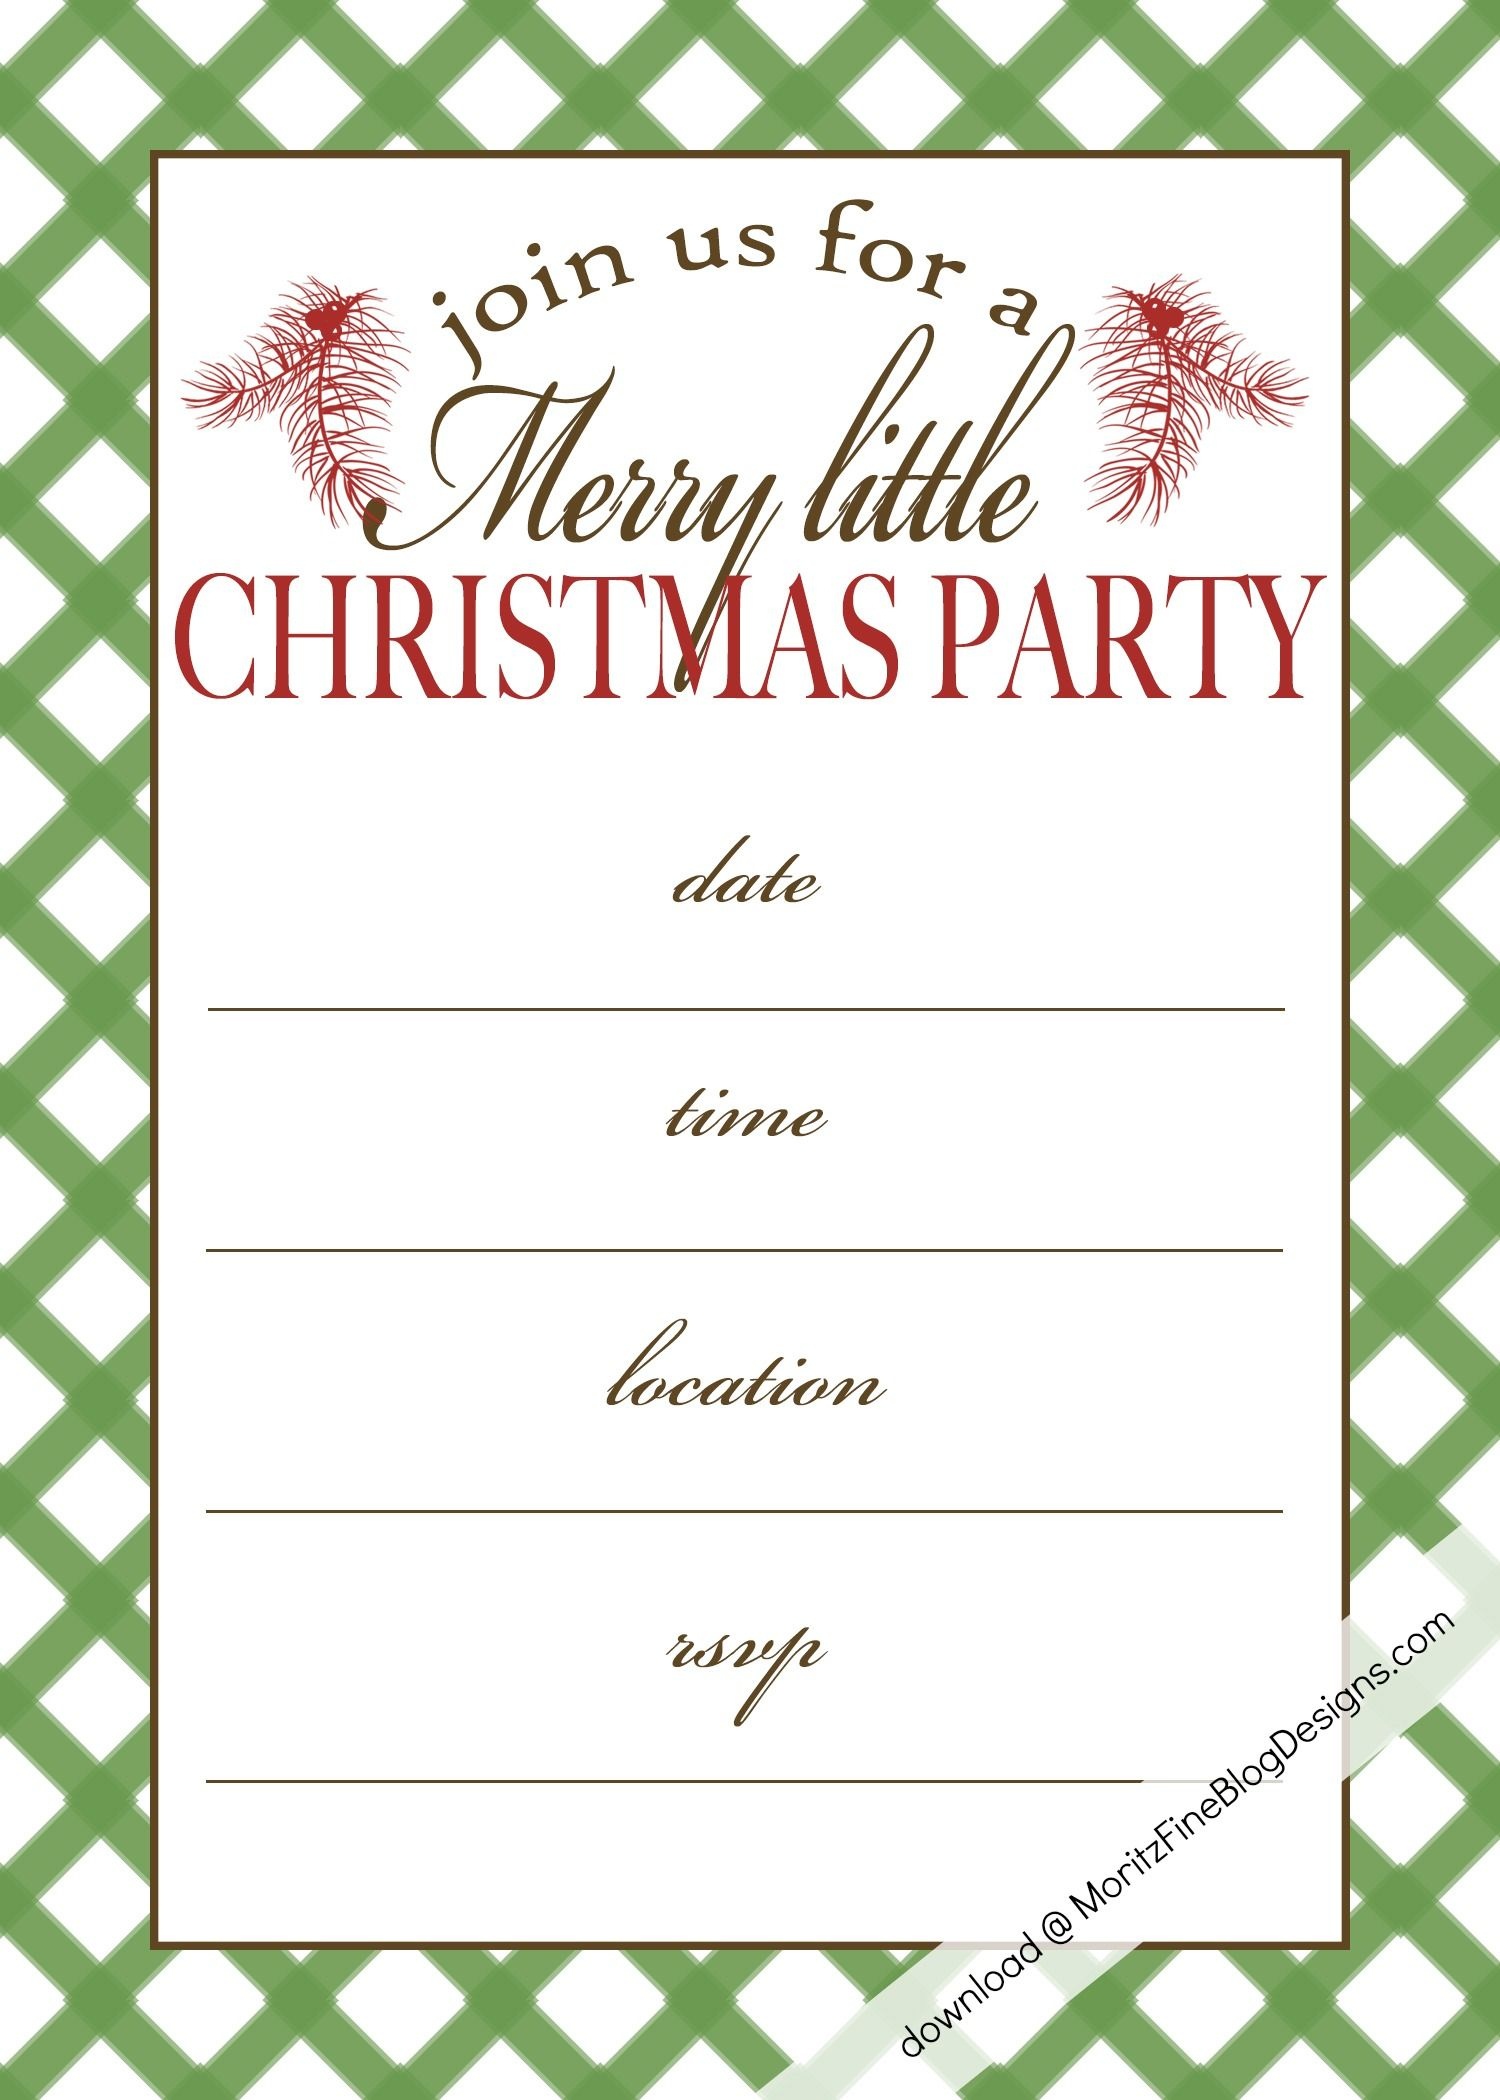 Free Printable Christmas Party Invitation | Christmas:print - Free Printable Christmas Party Invitations